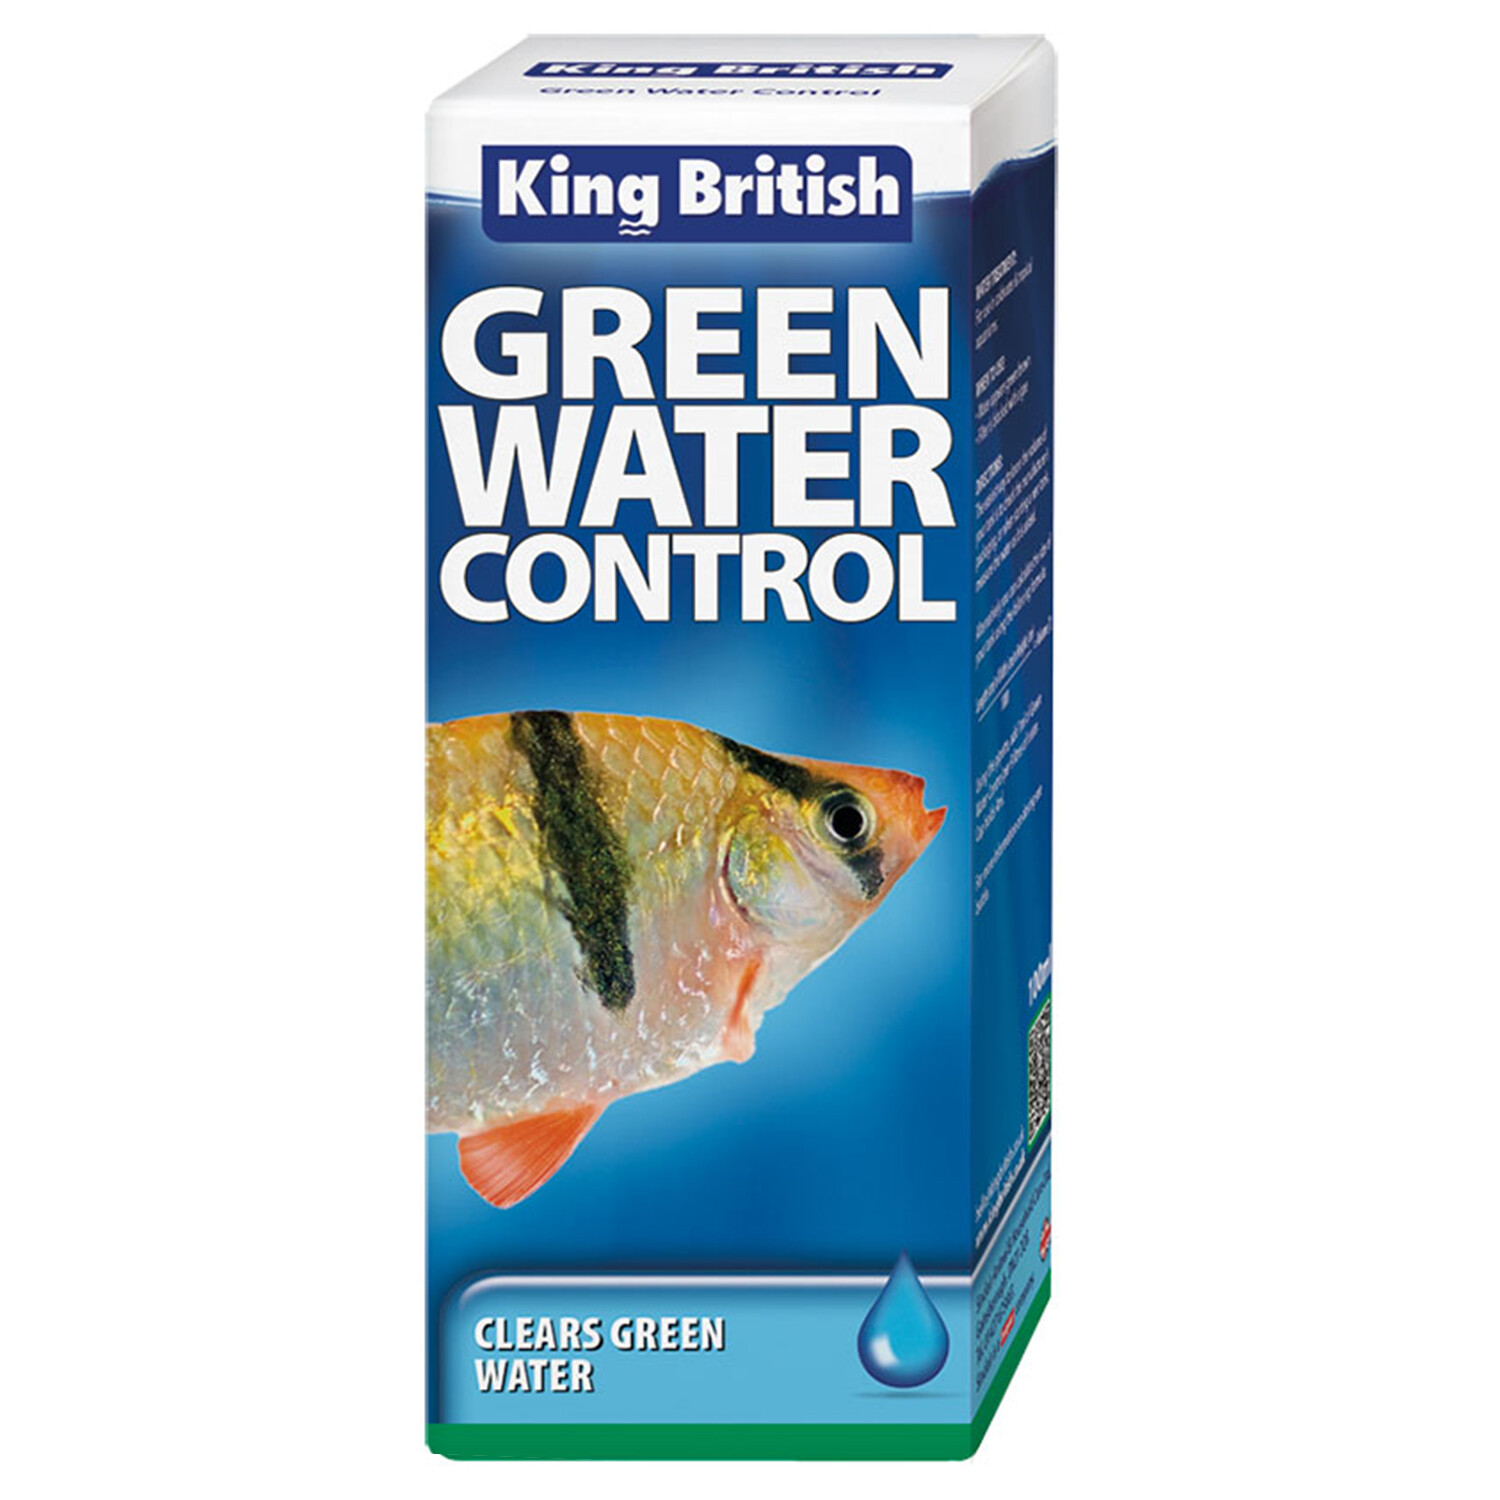 King British Green Water Control Image